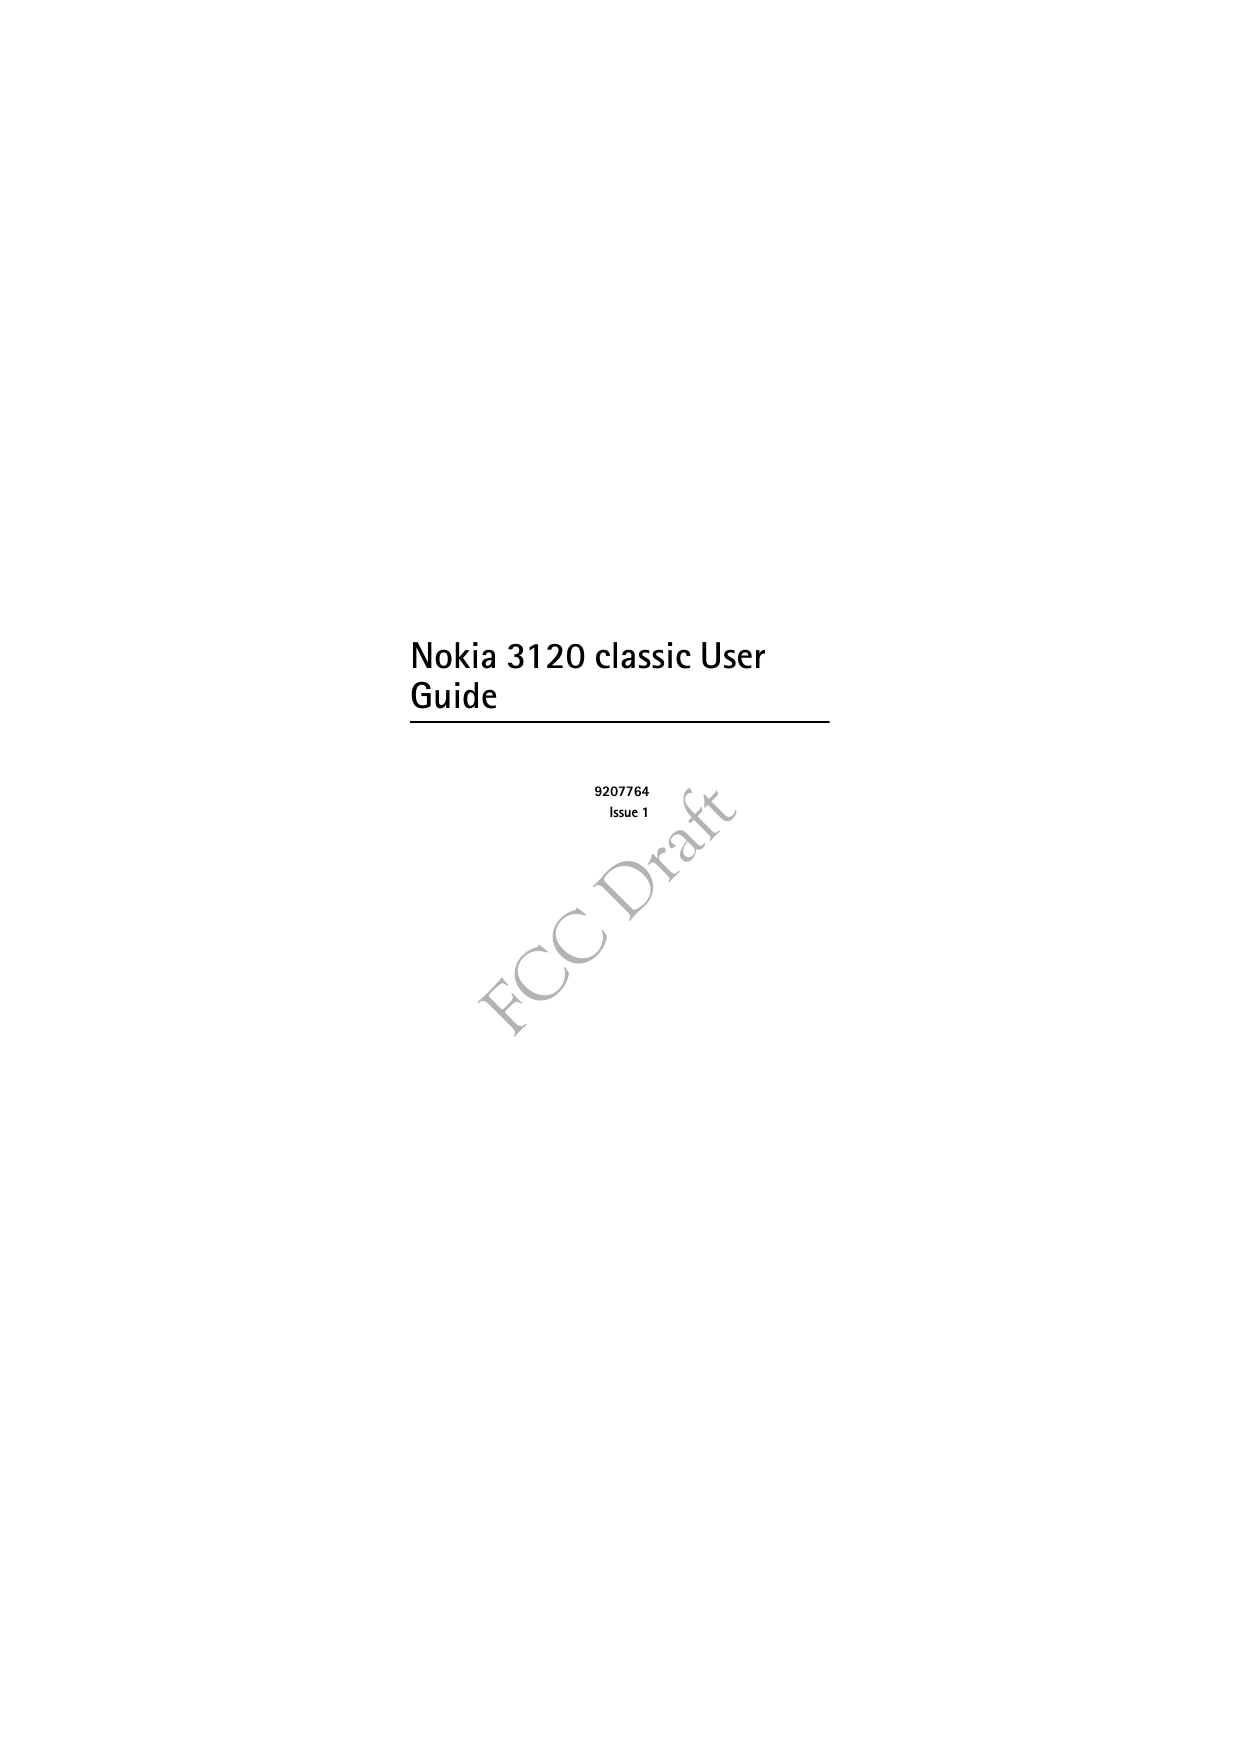 FCC DraftNokia 3120 classic User Guide9207764Issue 1